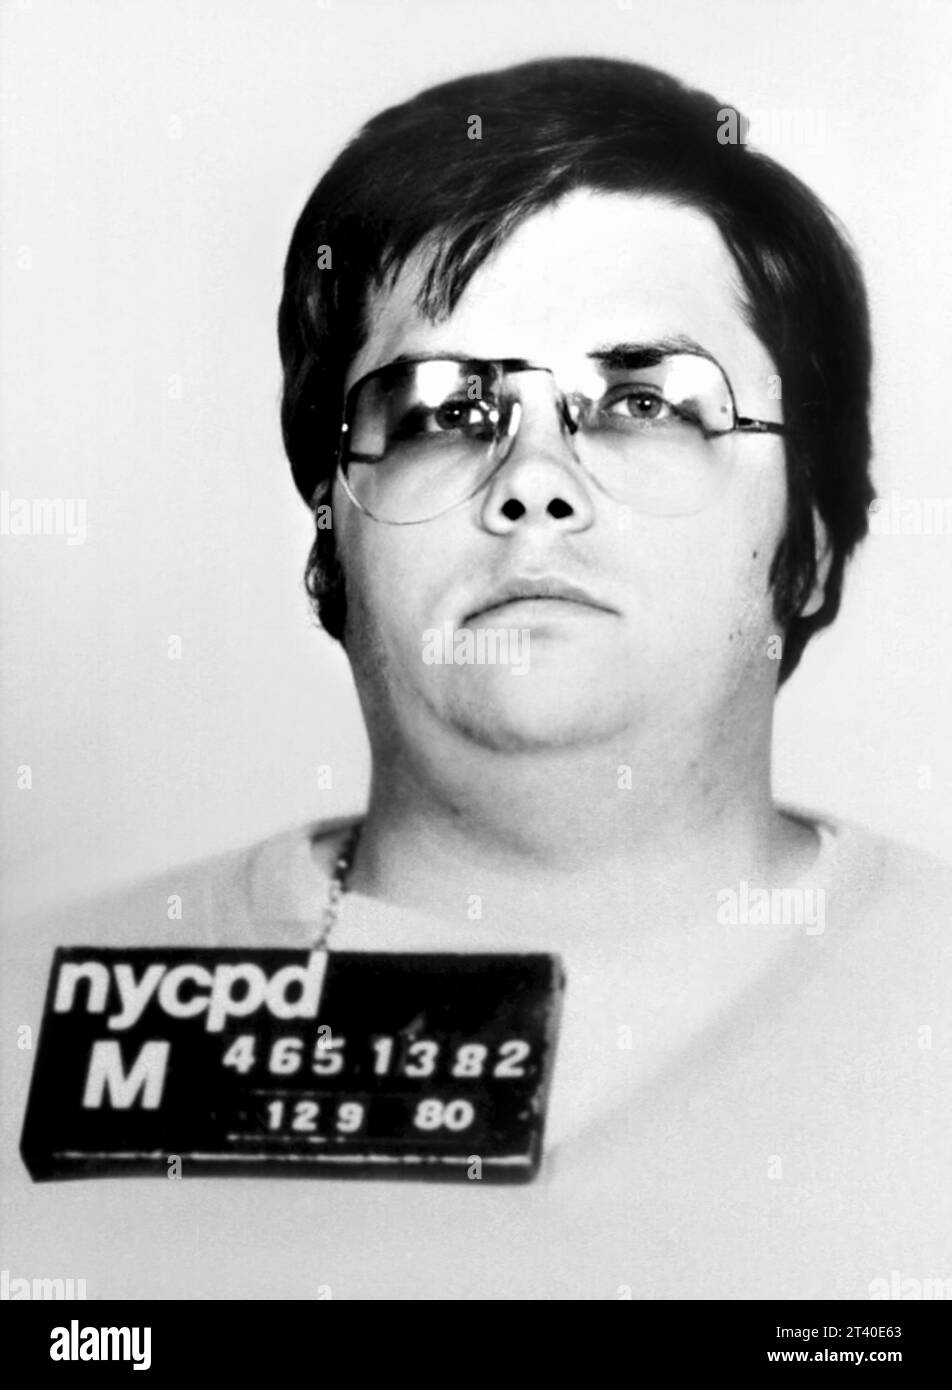 1980 , 9 december, NEW YORK , USA: The John Lennon killer , the american DAVID MARK CHAPMAN ( born 10 may 1955 ) . NEW YORK Police Department's mug shot of the assassin of ex-Beatles singer and composer JOHN LENNON ( 1940 - 1980 ) whitout a reason, killed in front at Dakota House the day 8 december 1980 . Unknown photographer  after arrestation the day 9 december . - portrait - portrait - police mugshot - MUG-SHOT - murderer - CRIME - KILLER - CRONACA NERA - MUSIC - MUSICA - lens - Ray-Ban - occhiali da vista  --- GBB Archive Stock Photo